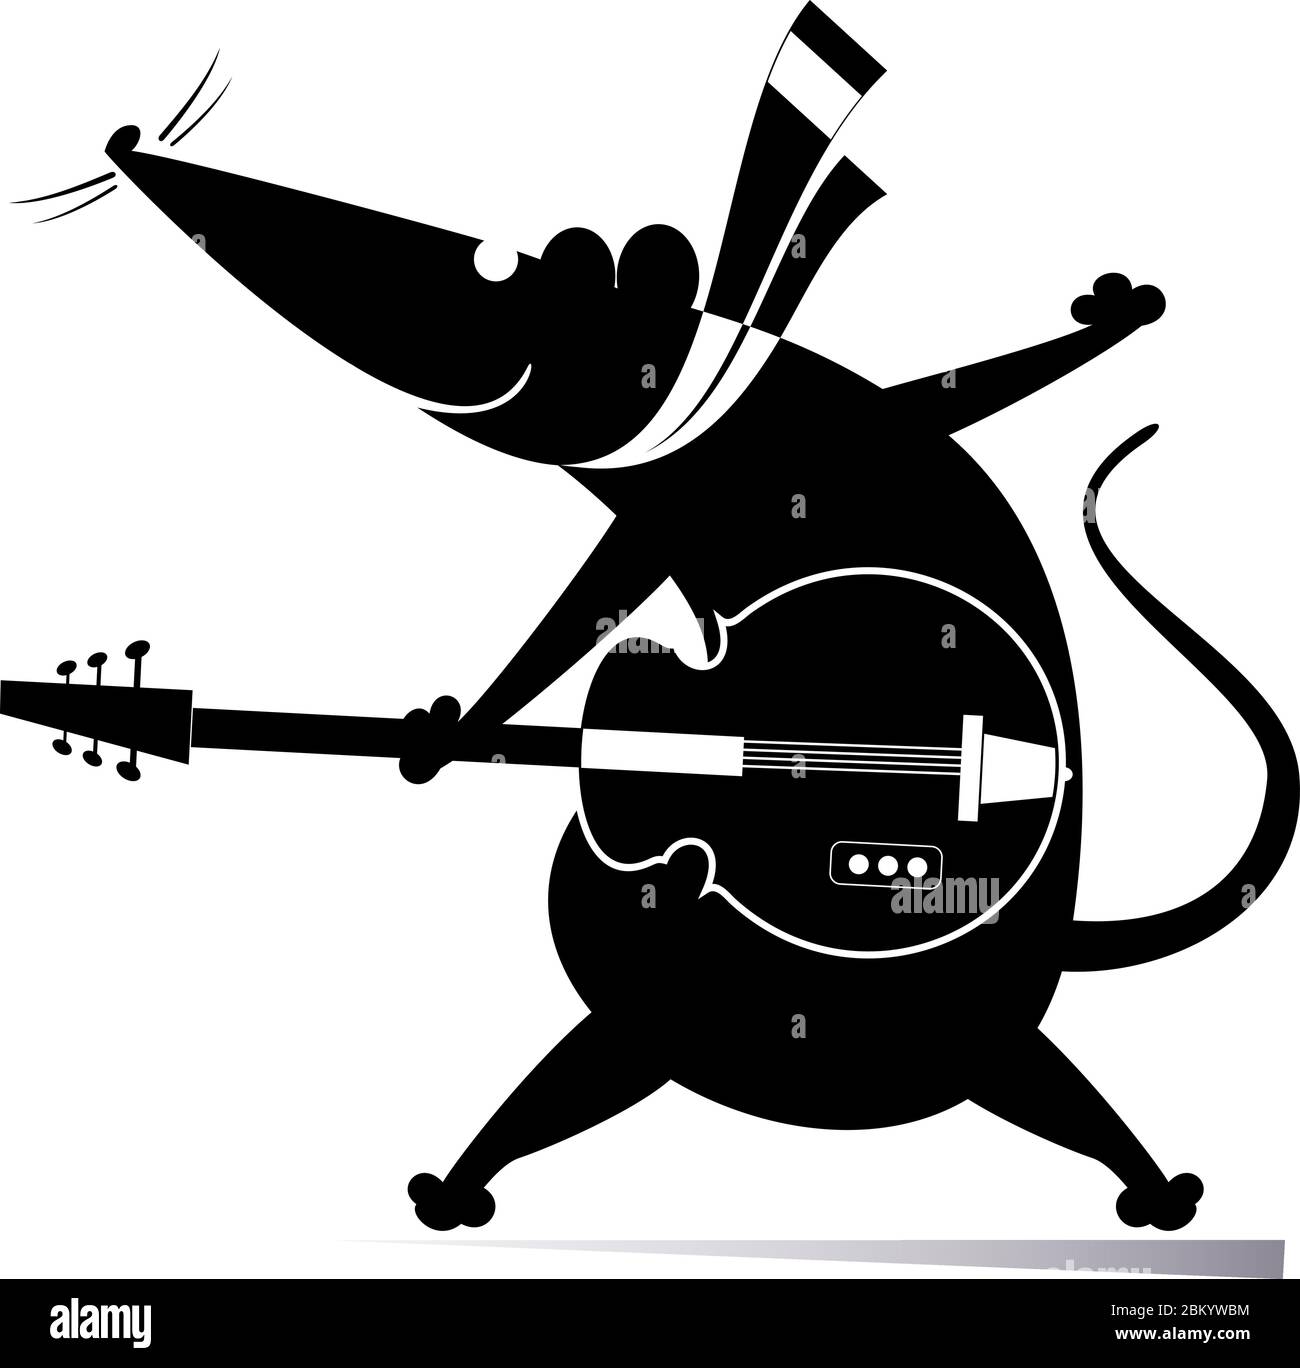 Cartoon rat or mouse plays guitar illustration. Rat or mouse plays guitar silhouette black on white Stock Vector